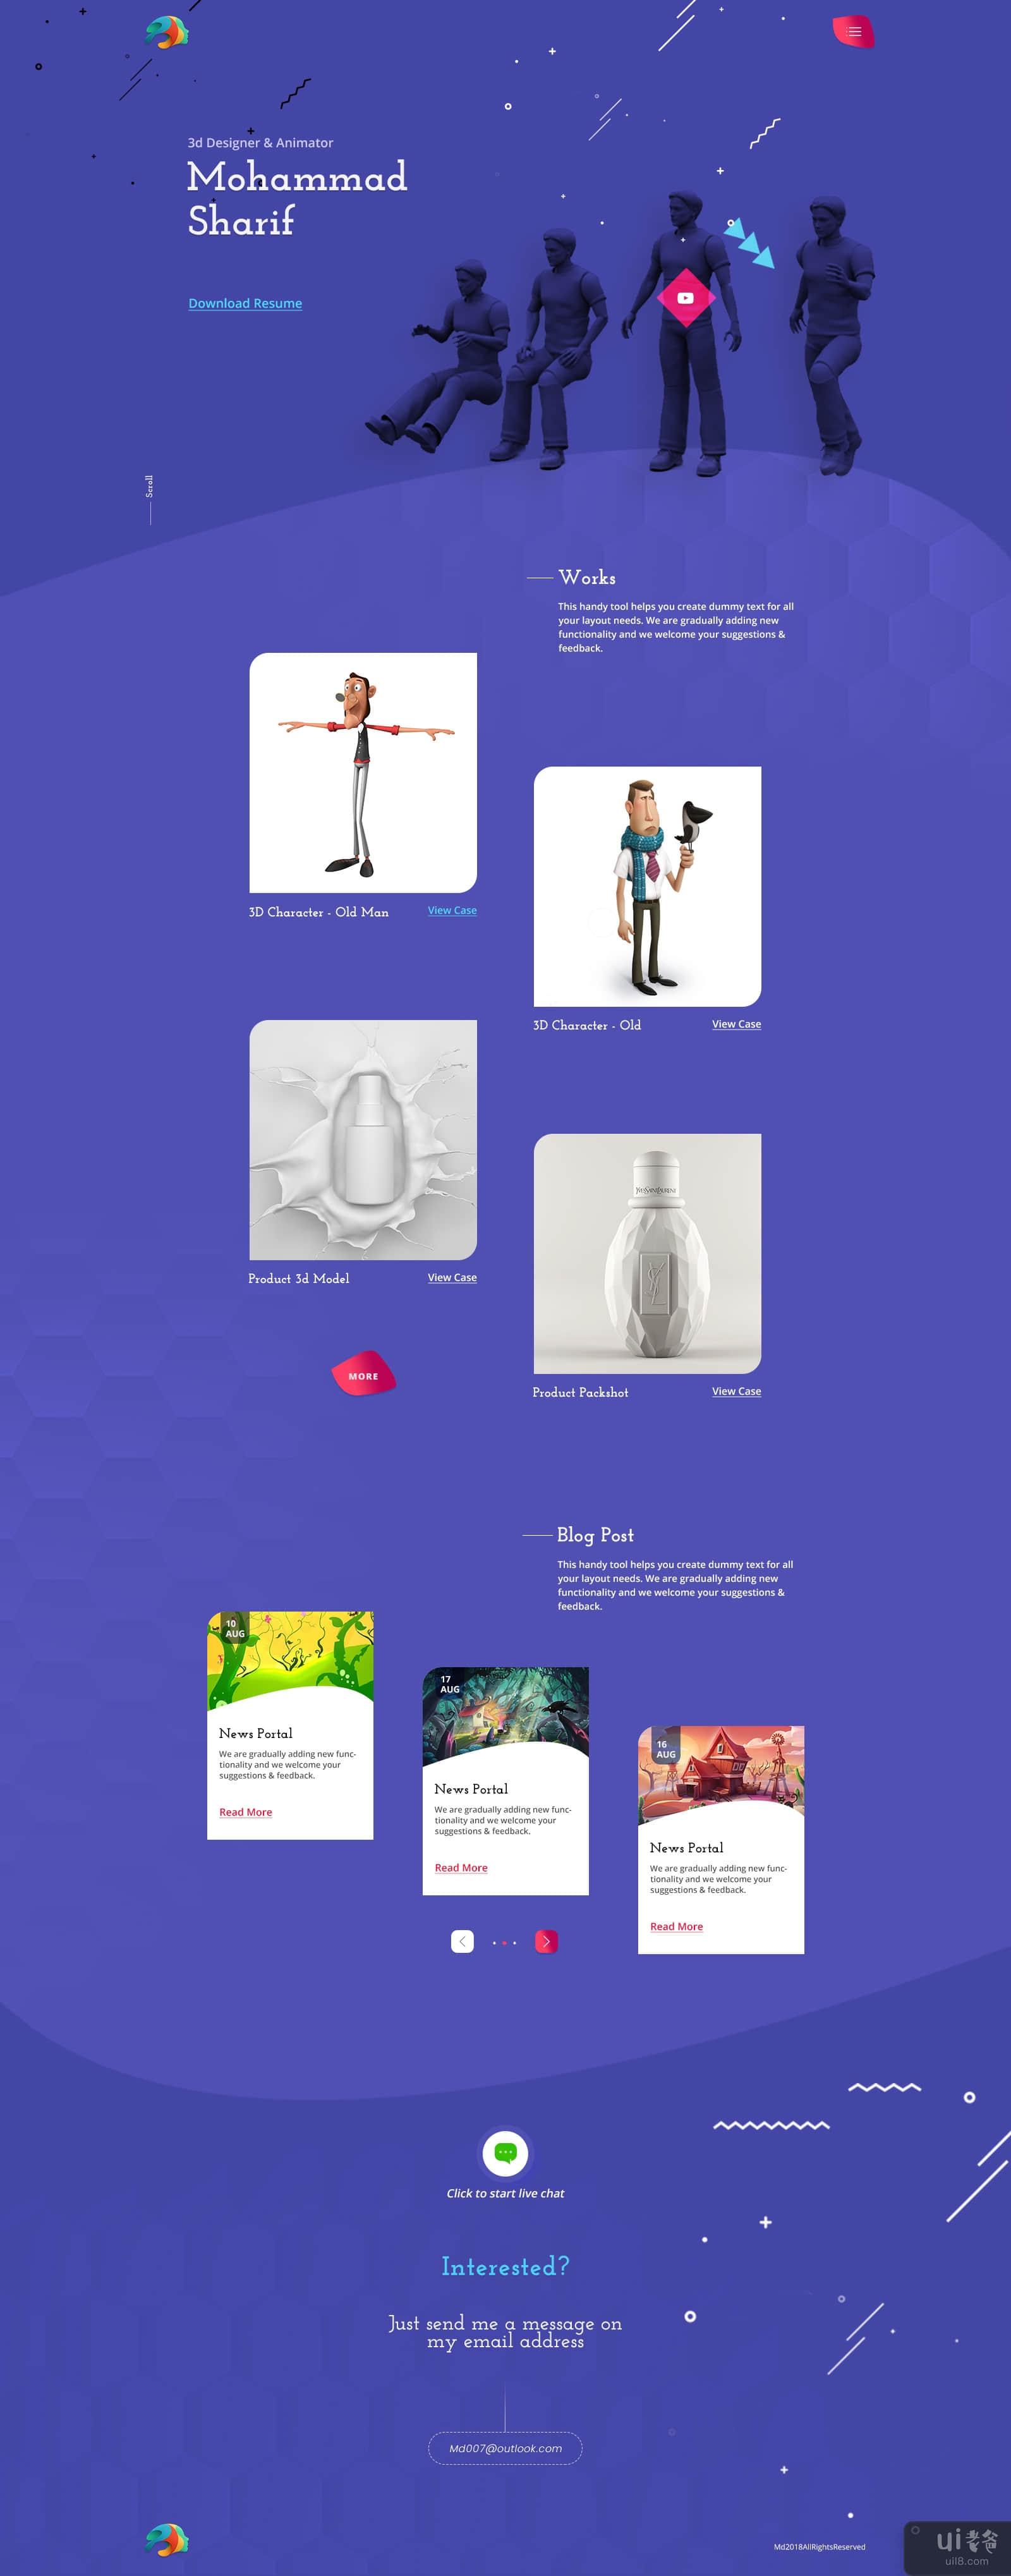 3d 艺术家网站 |概念(3d artist website | concept)插图